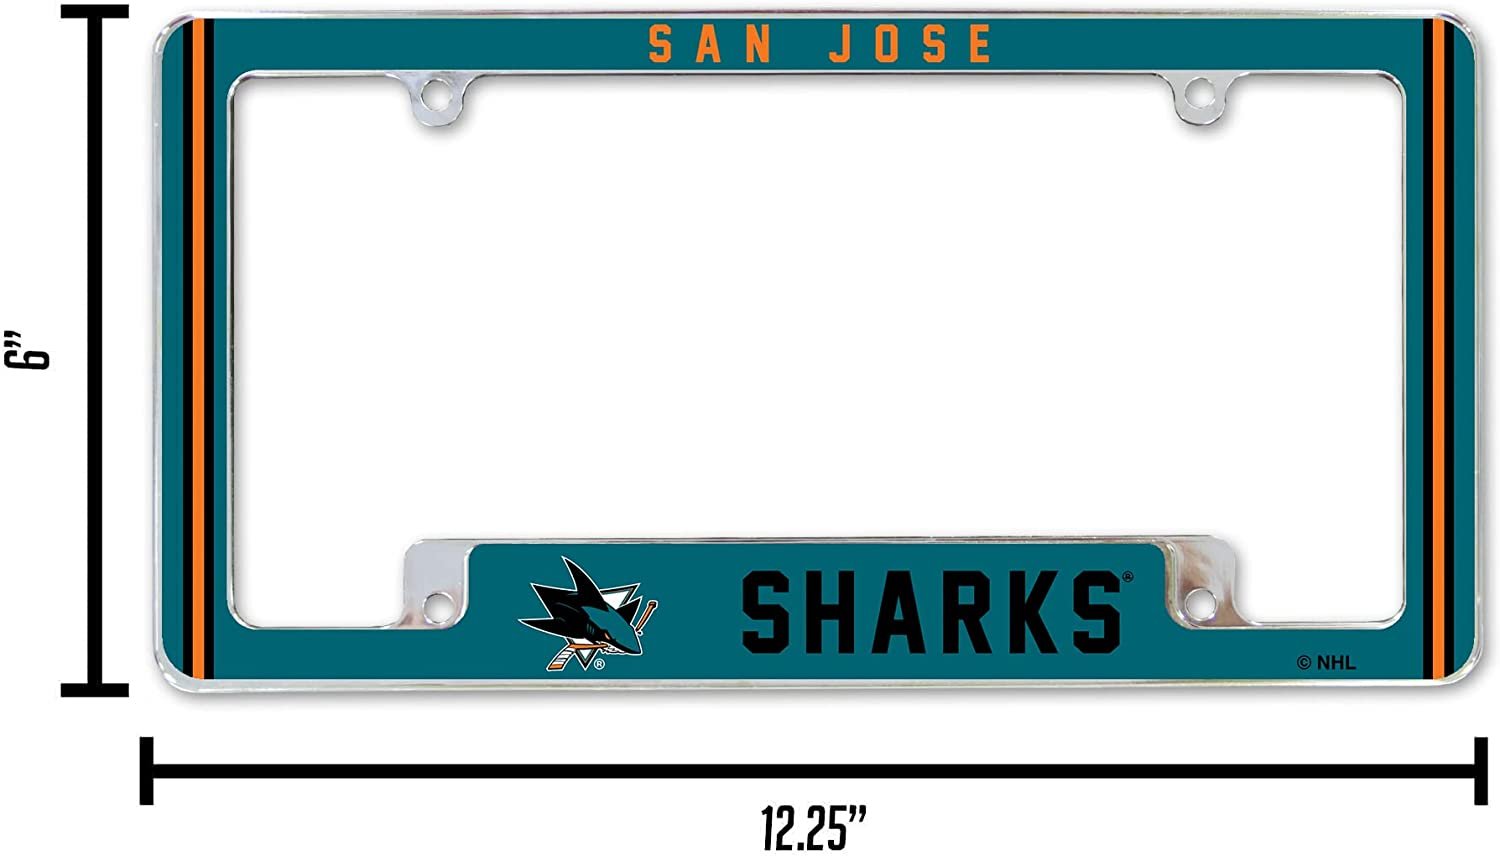 San Jose Sharks Metal License Plate Frame Chrome Tag Cover Alternate Design 6x12 Inch